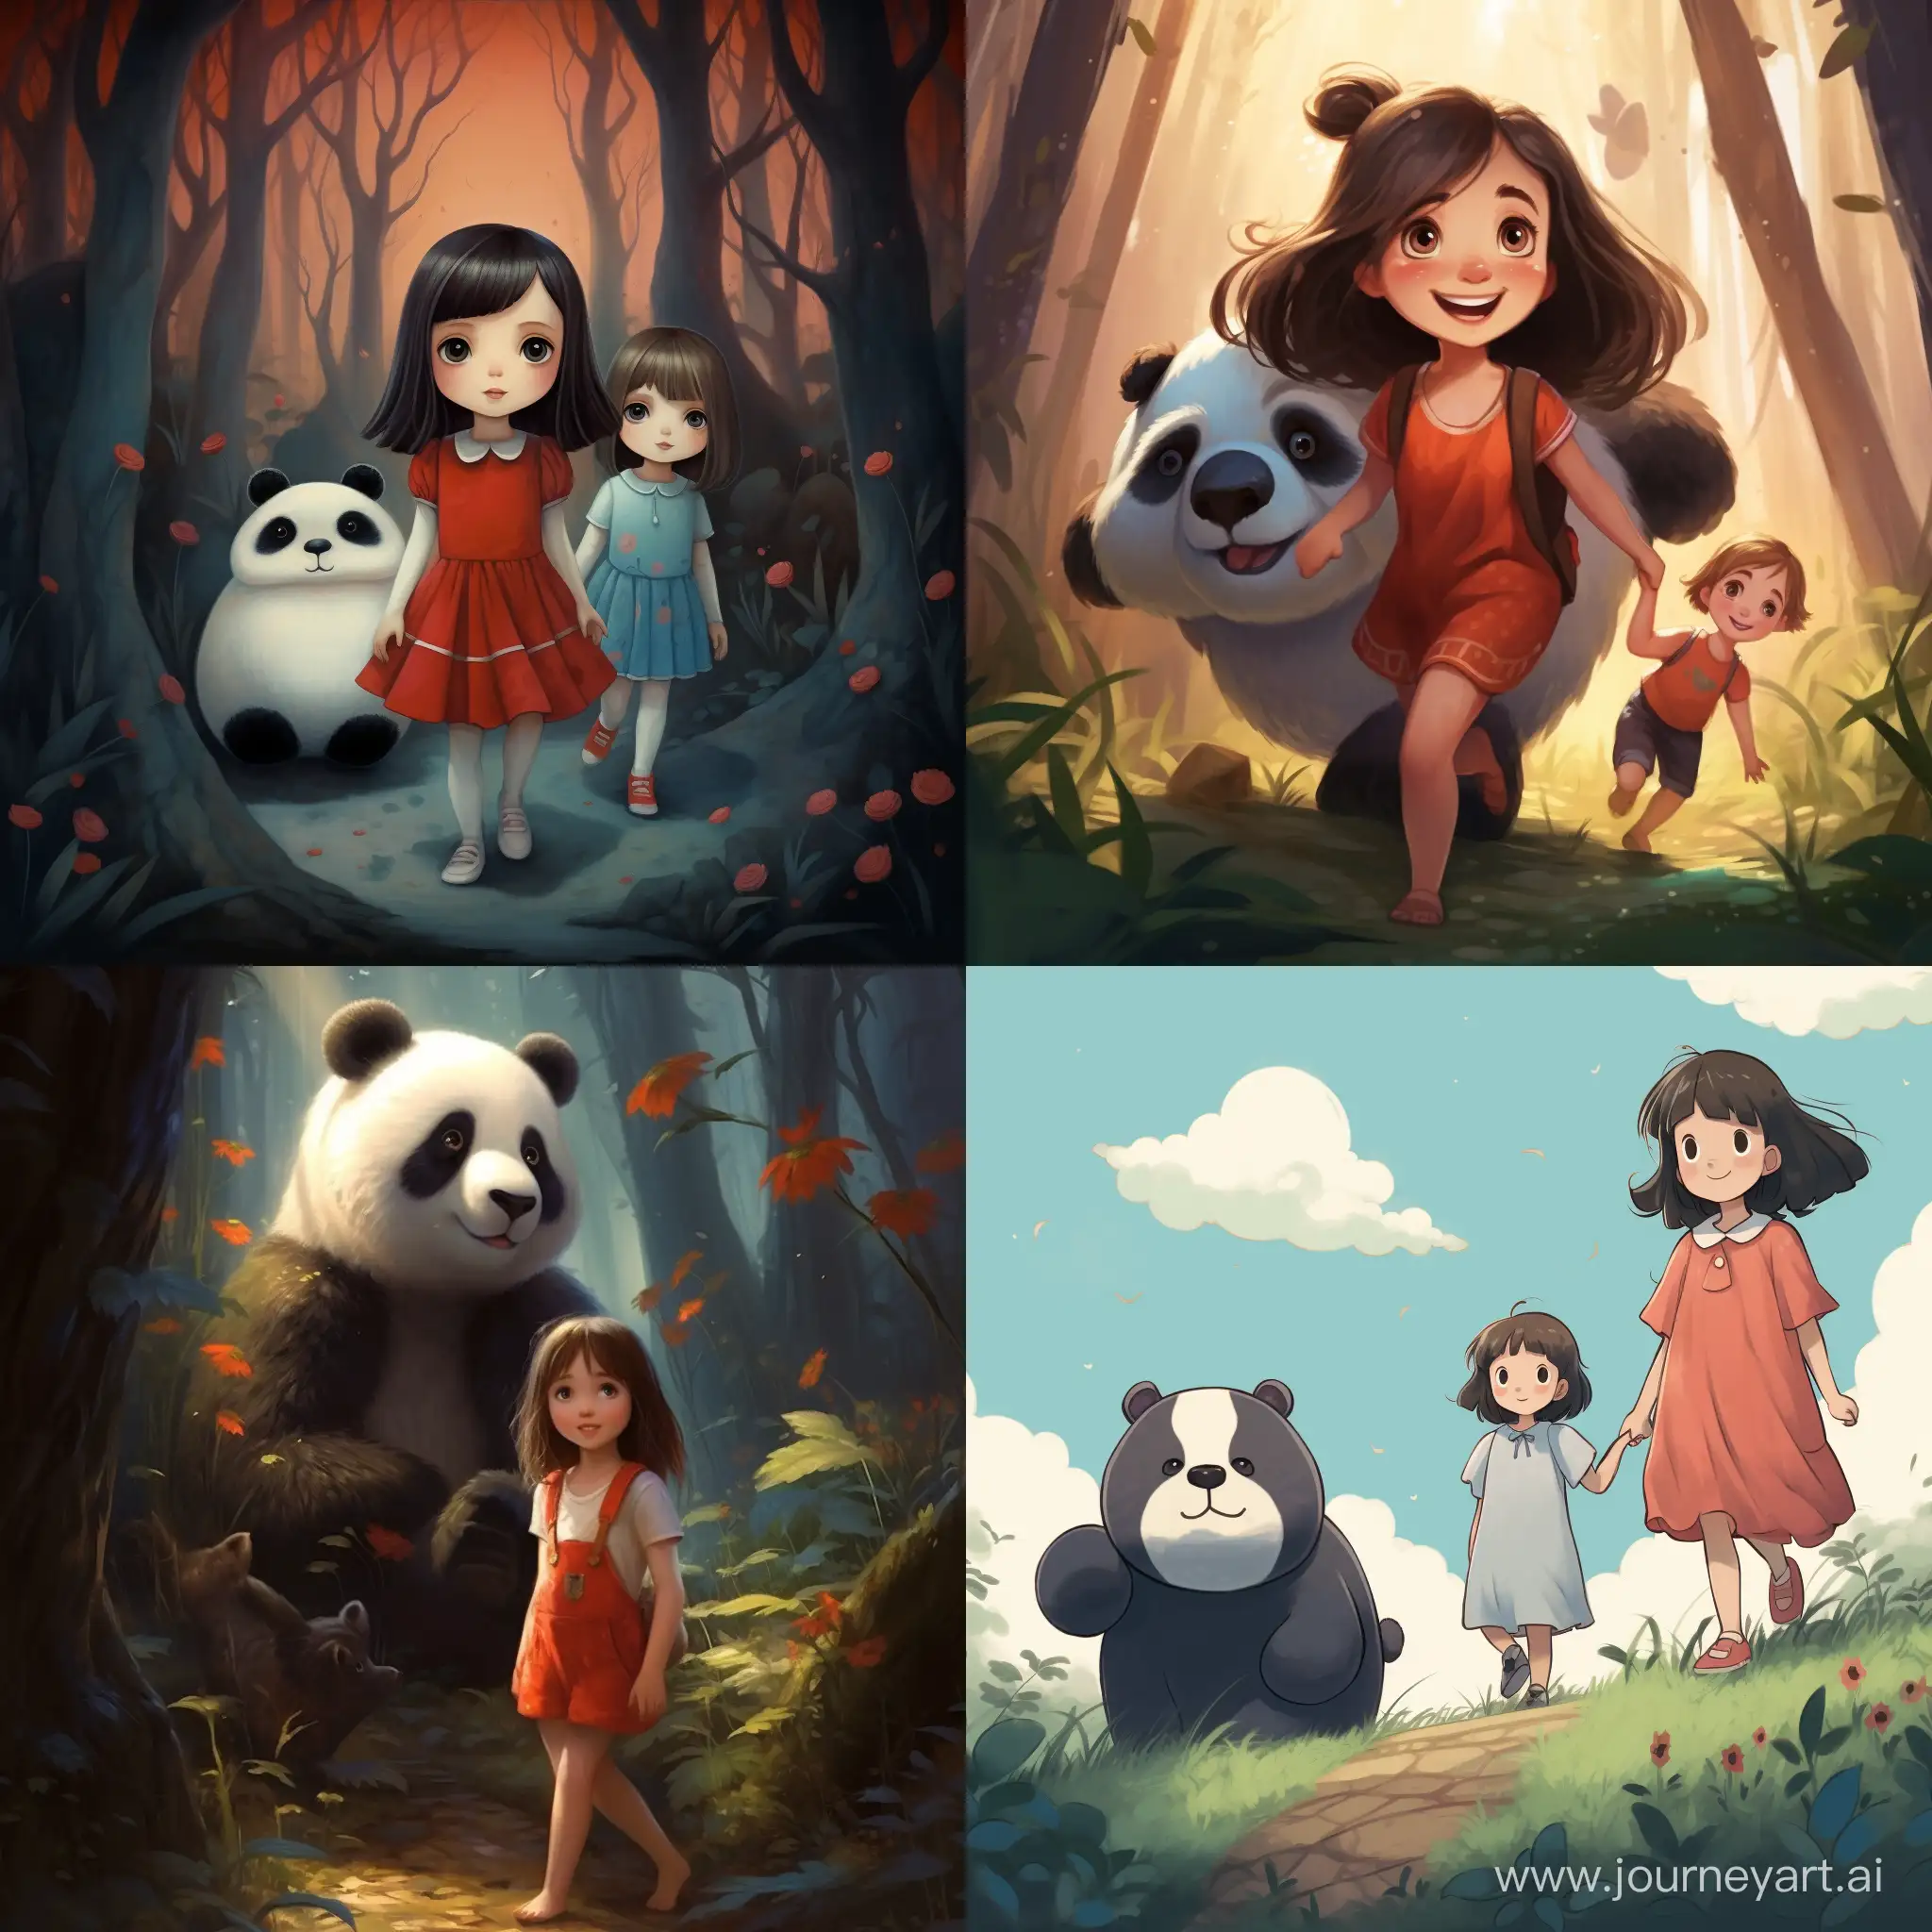 Adorable-Giant-Panda-Guiding-Two-Little-Girls